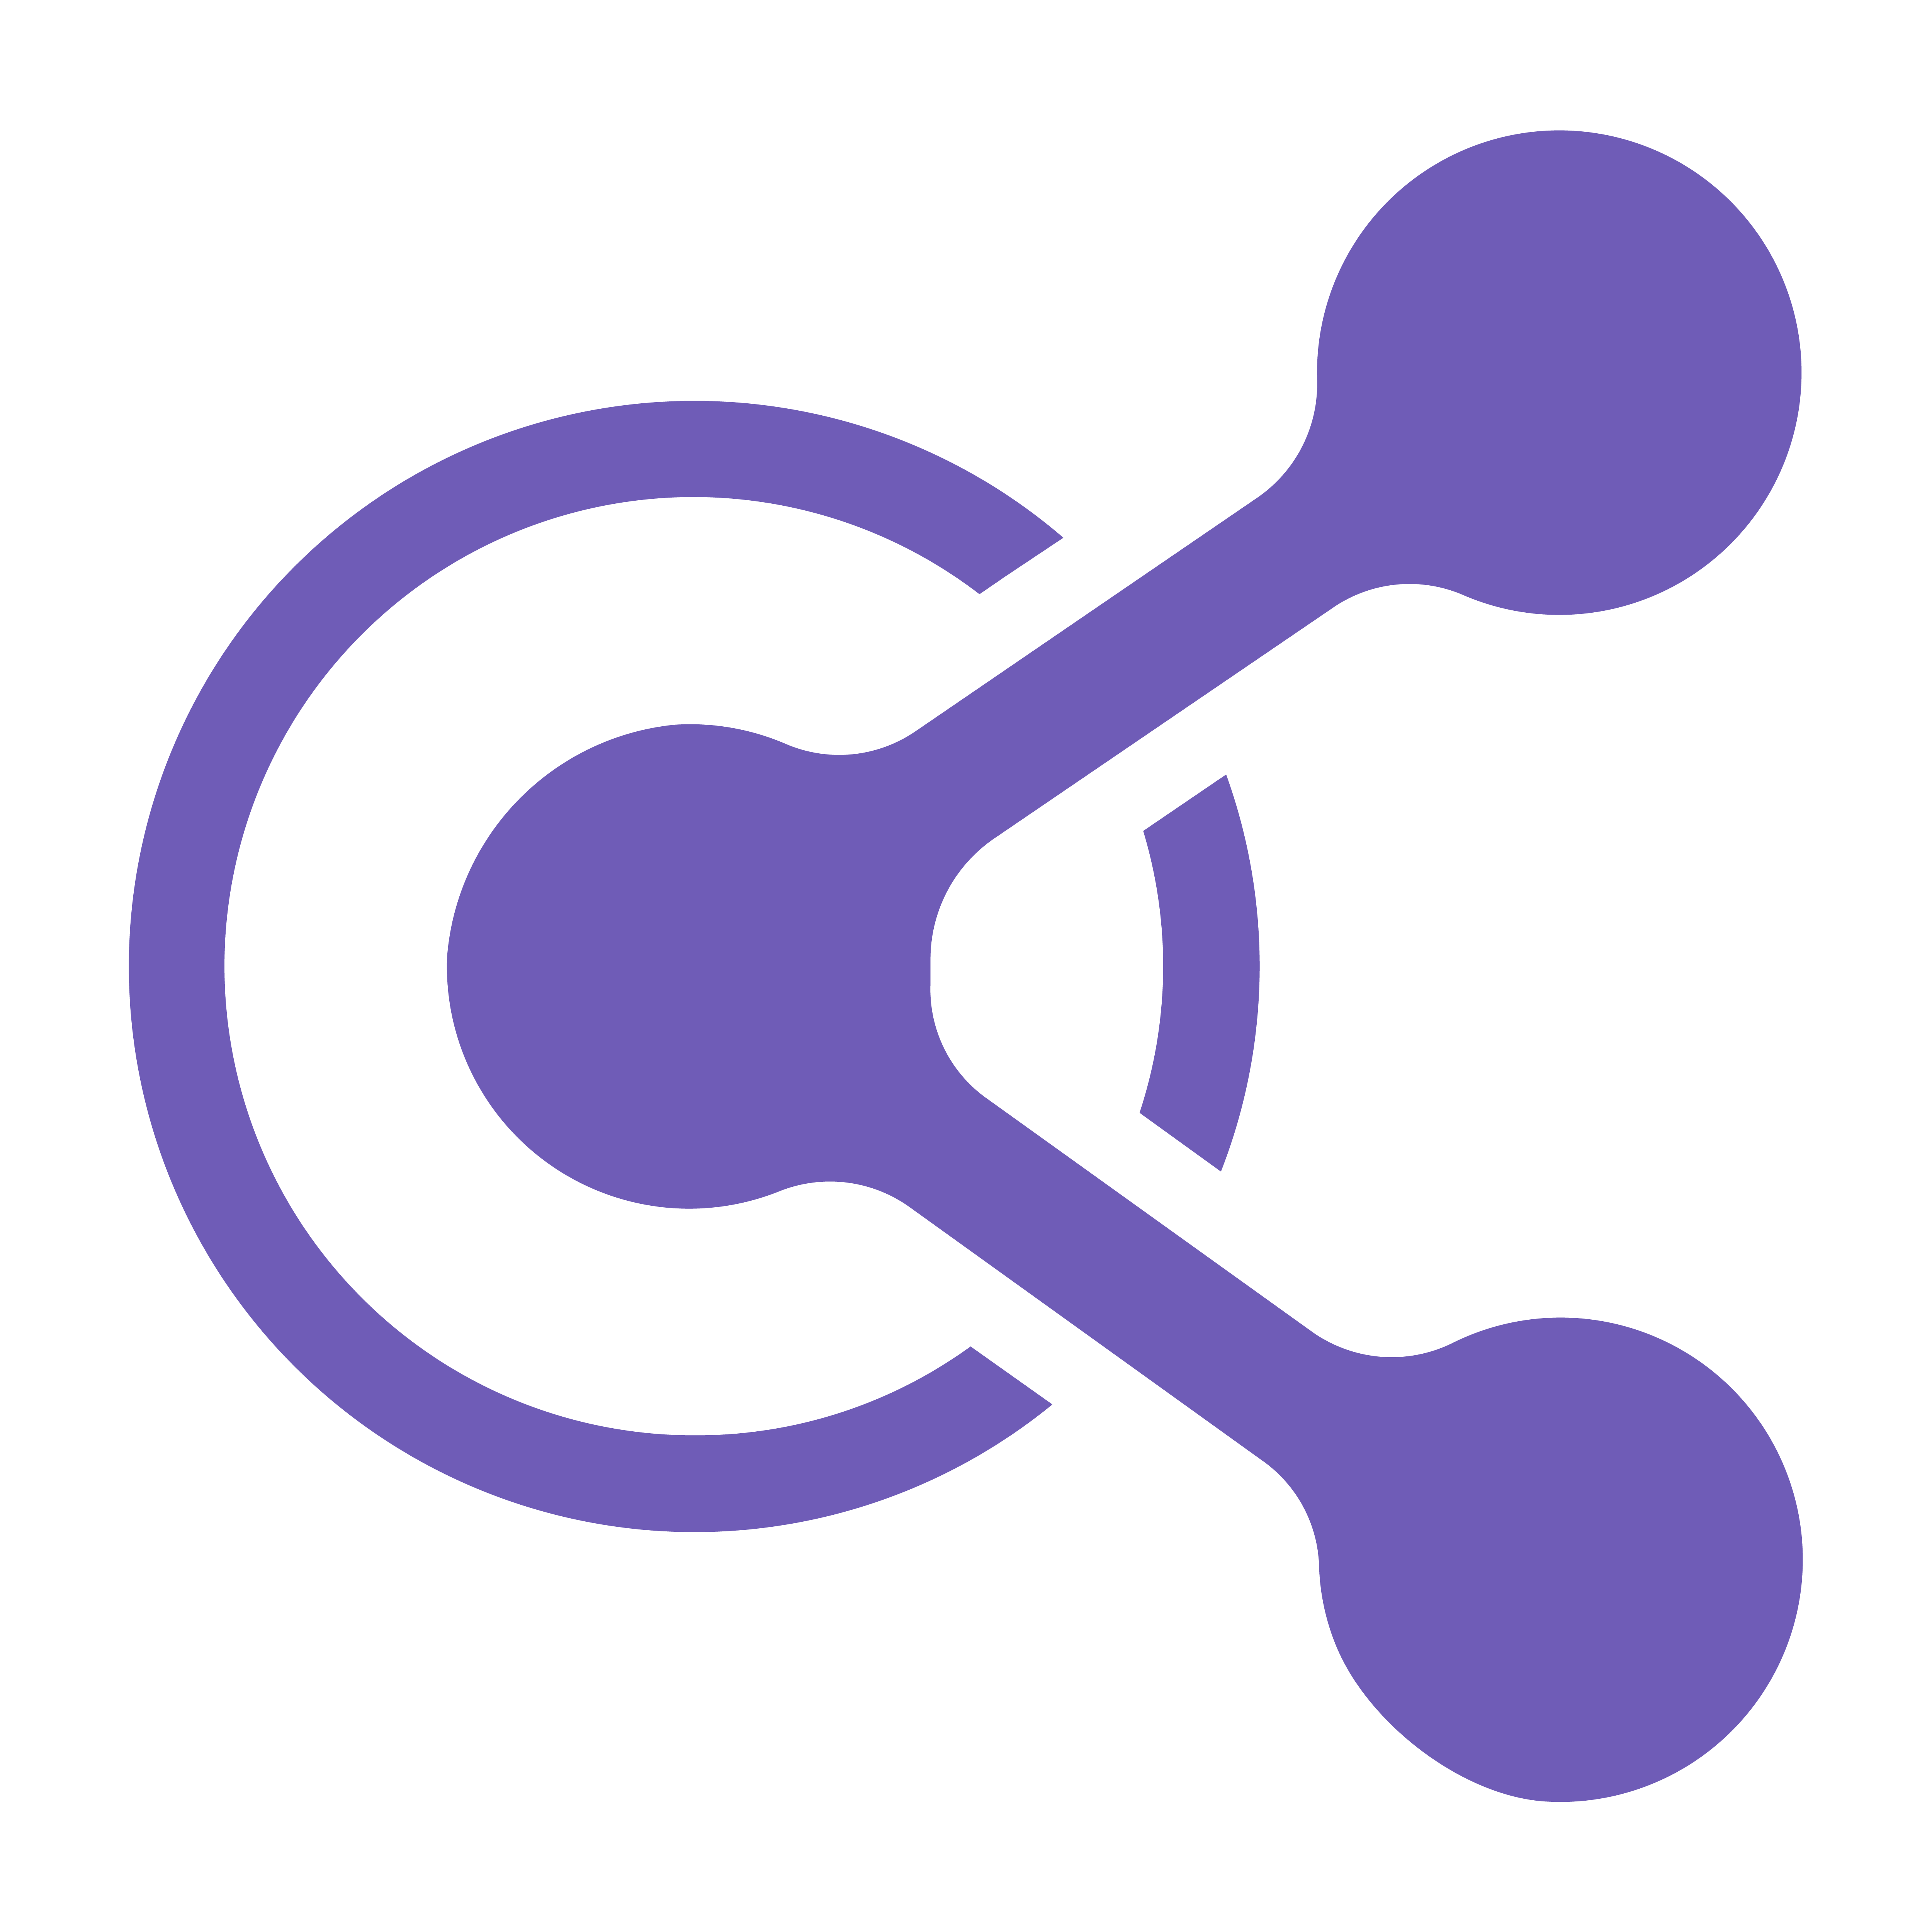 digital cert landinng page graphics_-share symbol A_purple